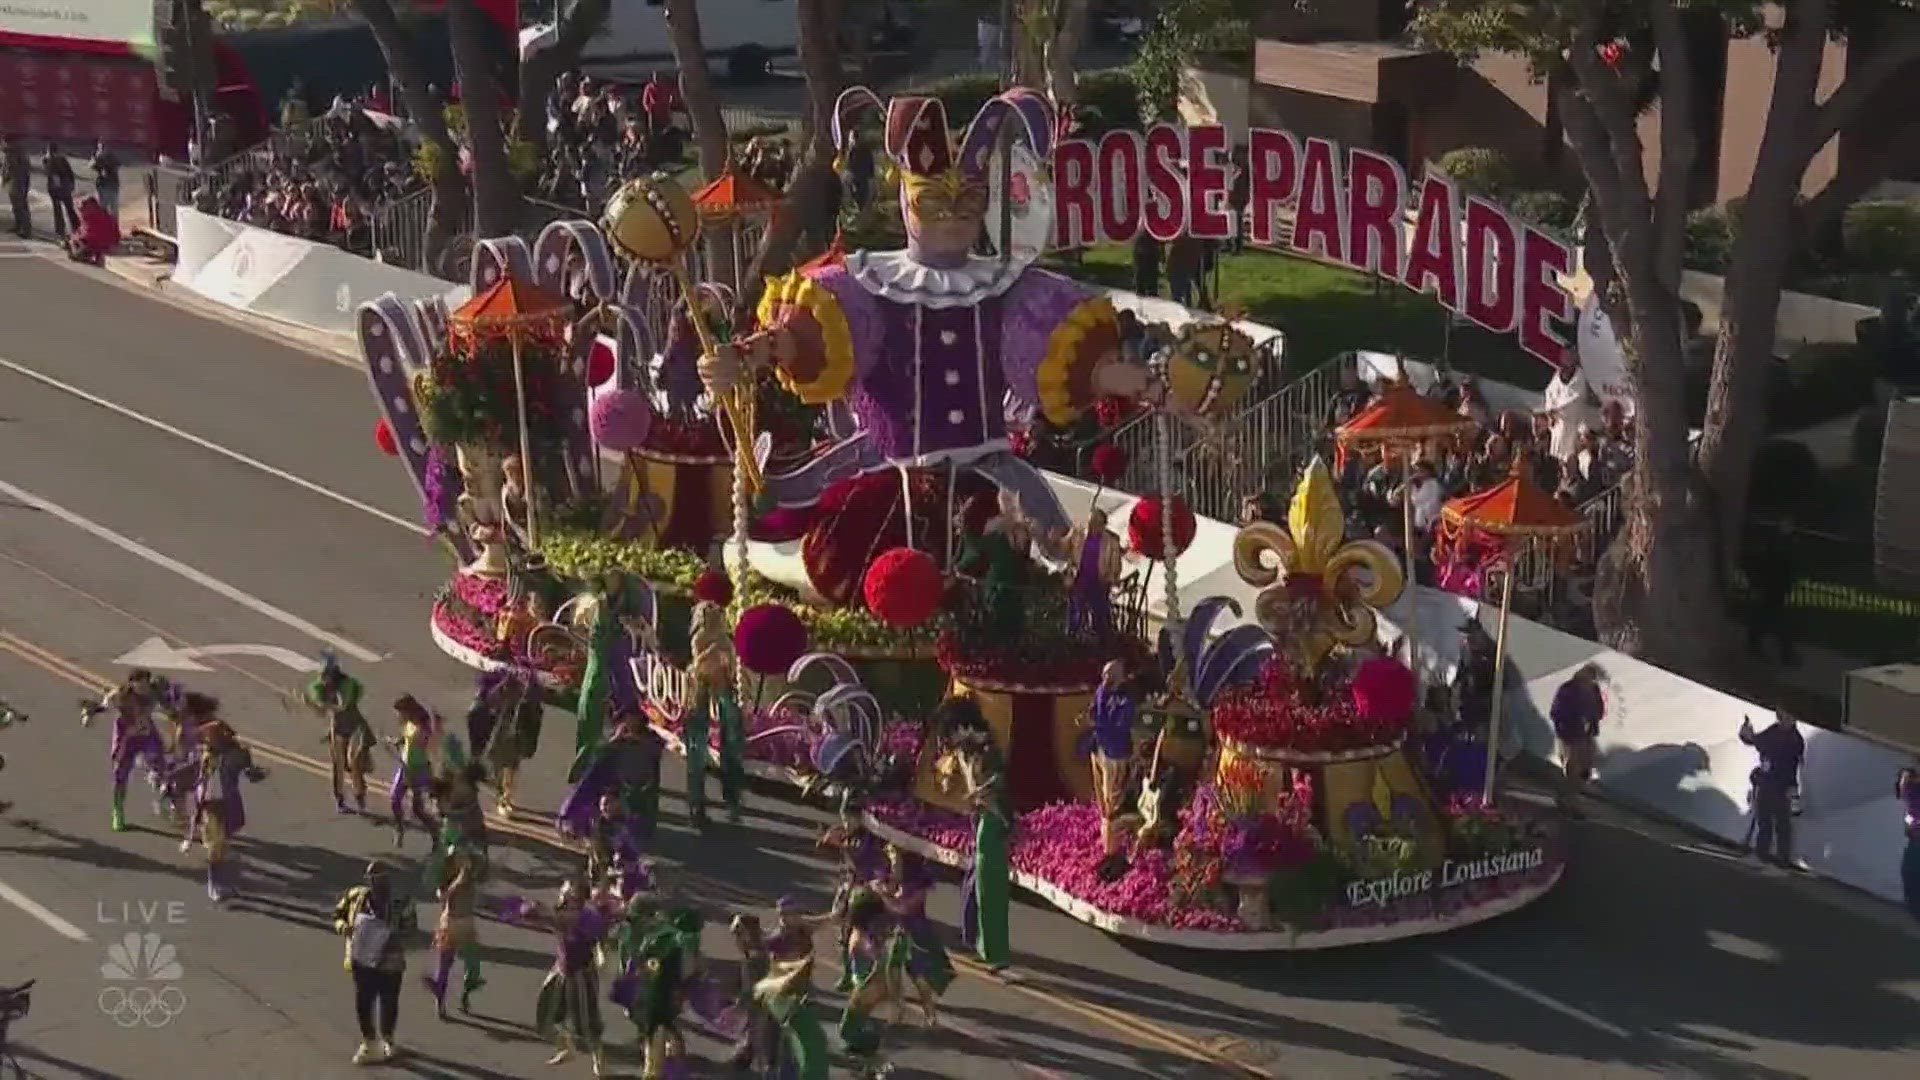 Louisiana's Rose Parade float wins award | wwltv.com